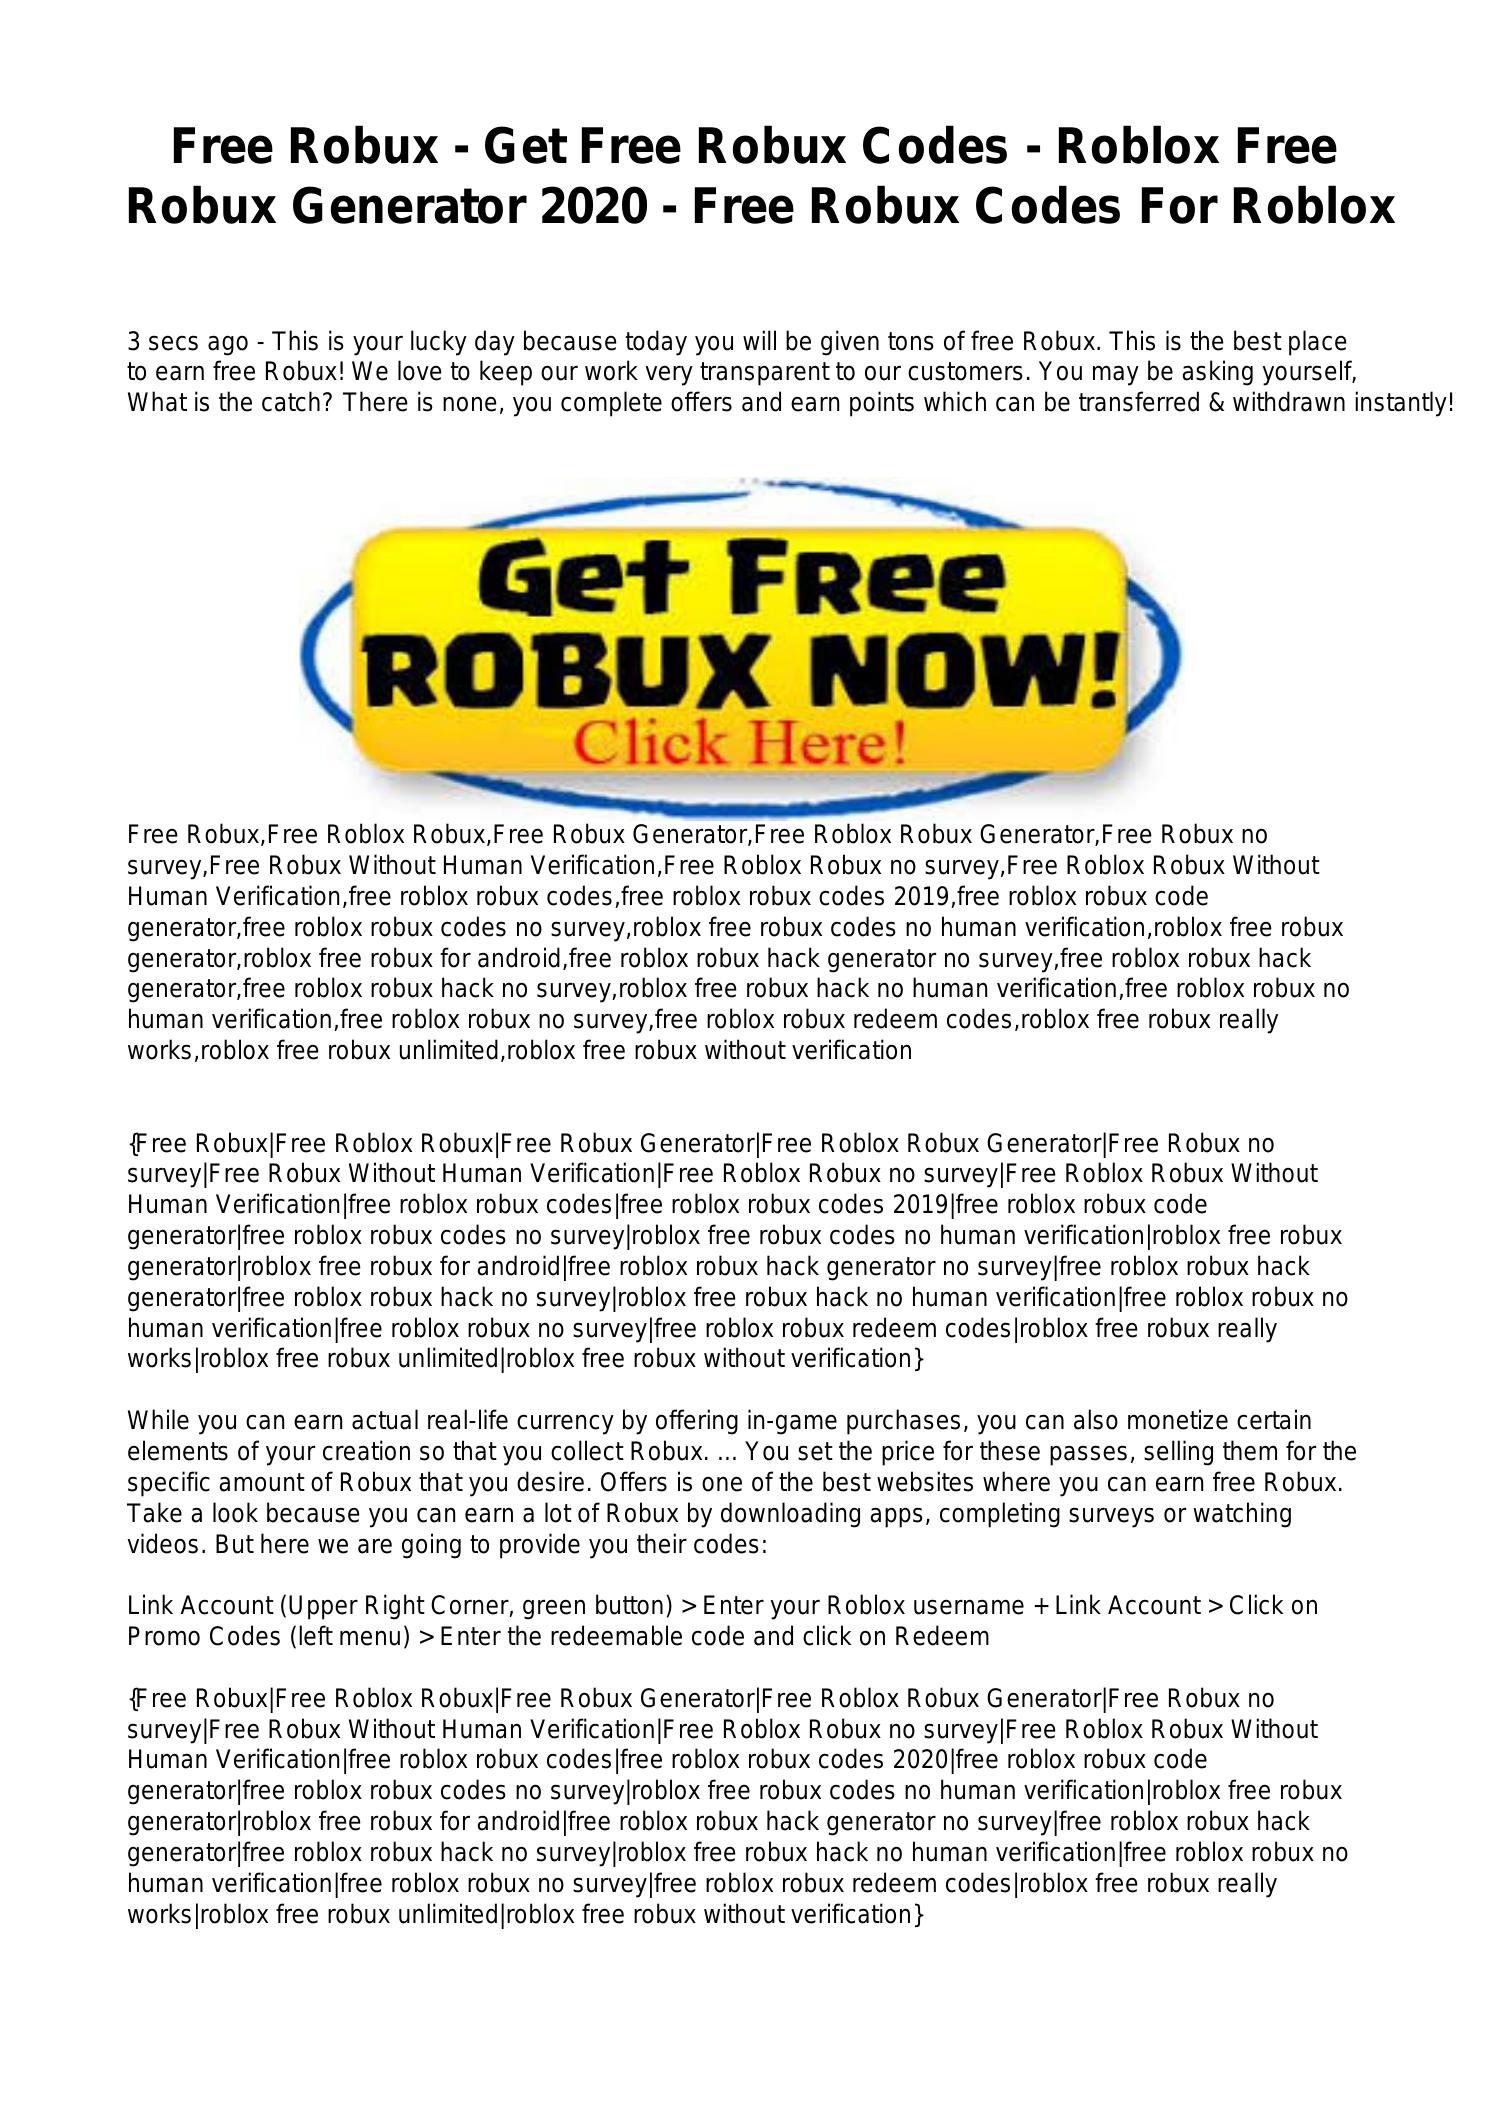 Redeem Code Roblox Robux